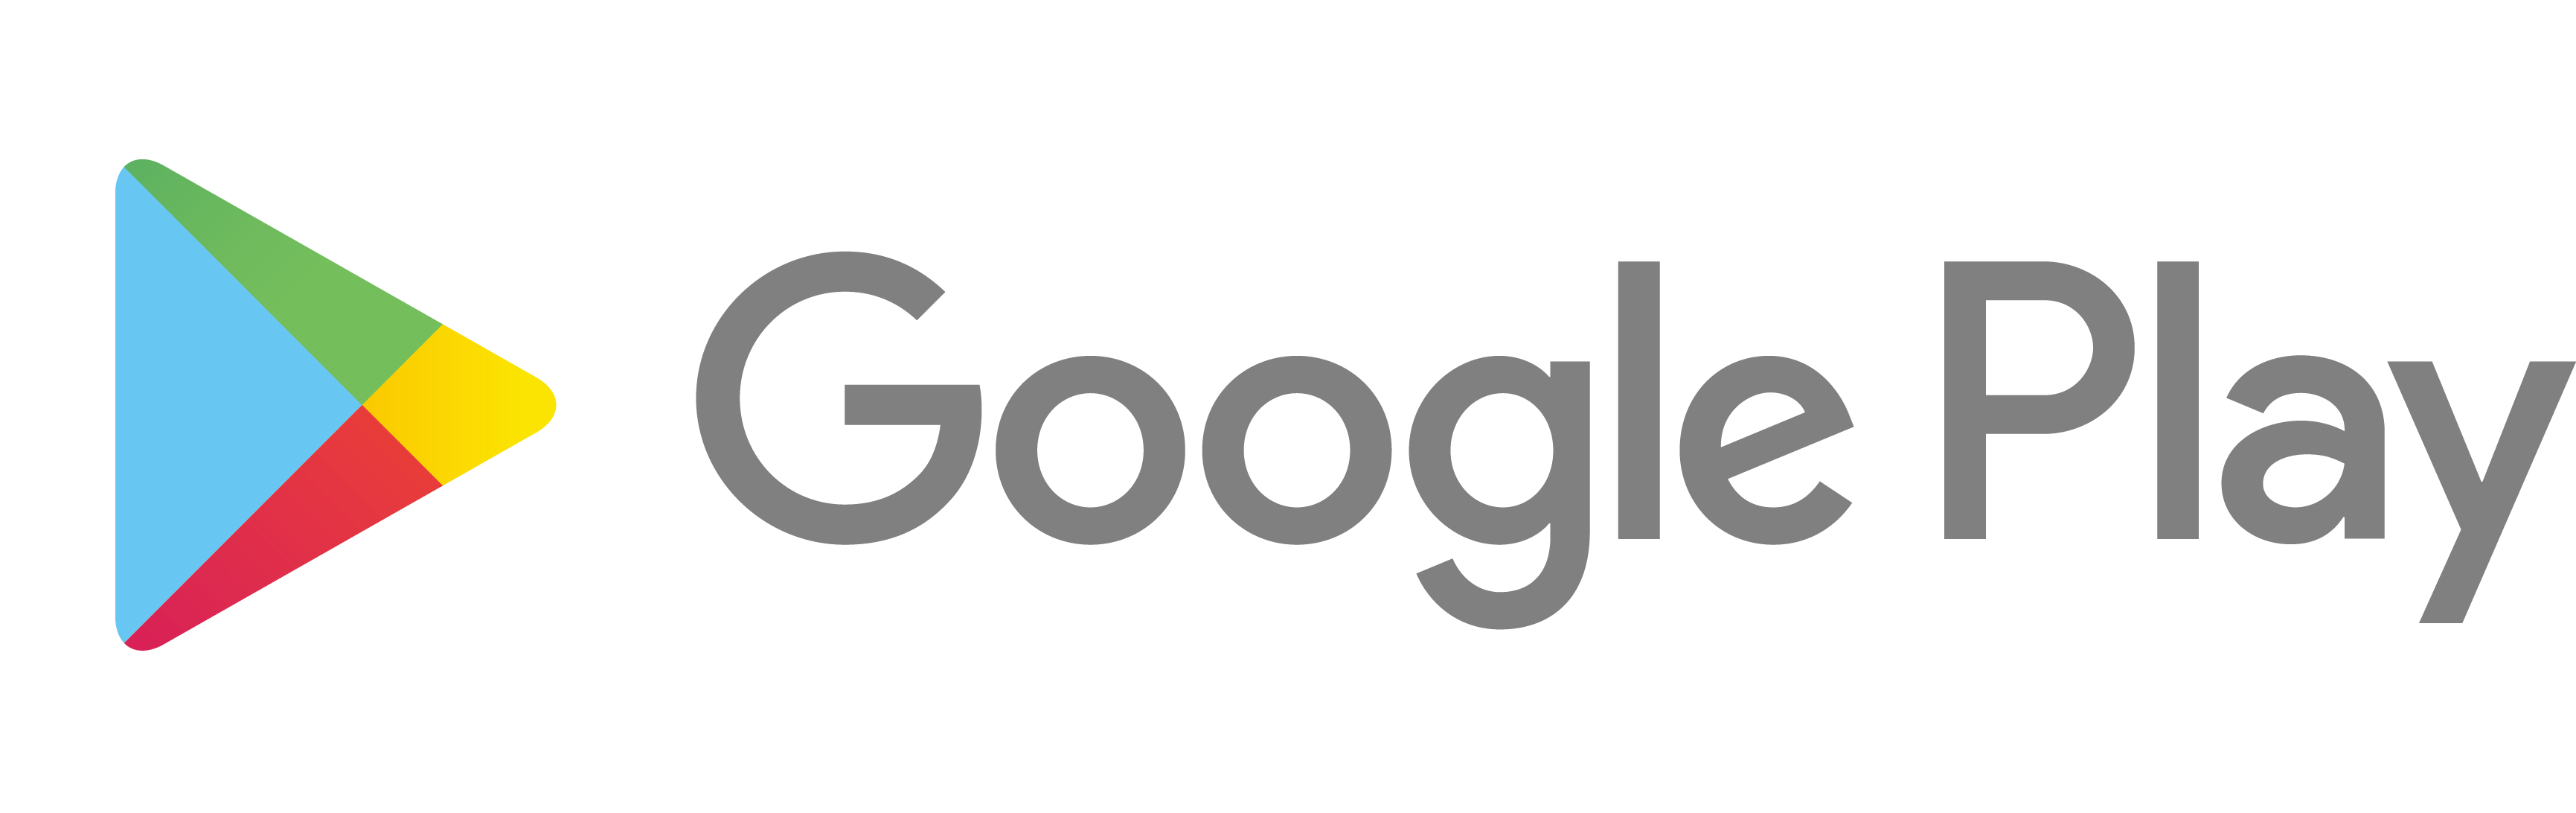 Google Play. Значок Google Play. Гугл плей Маркет логотип. Google Play логотип PNG.